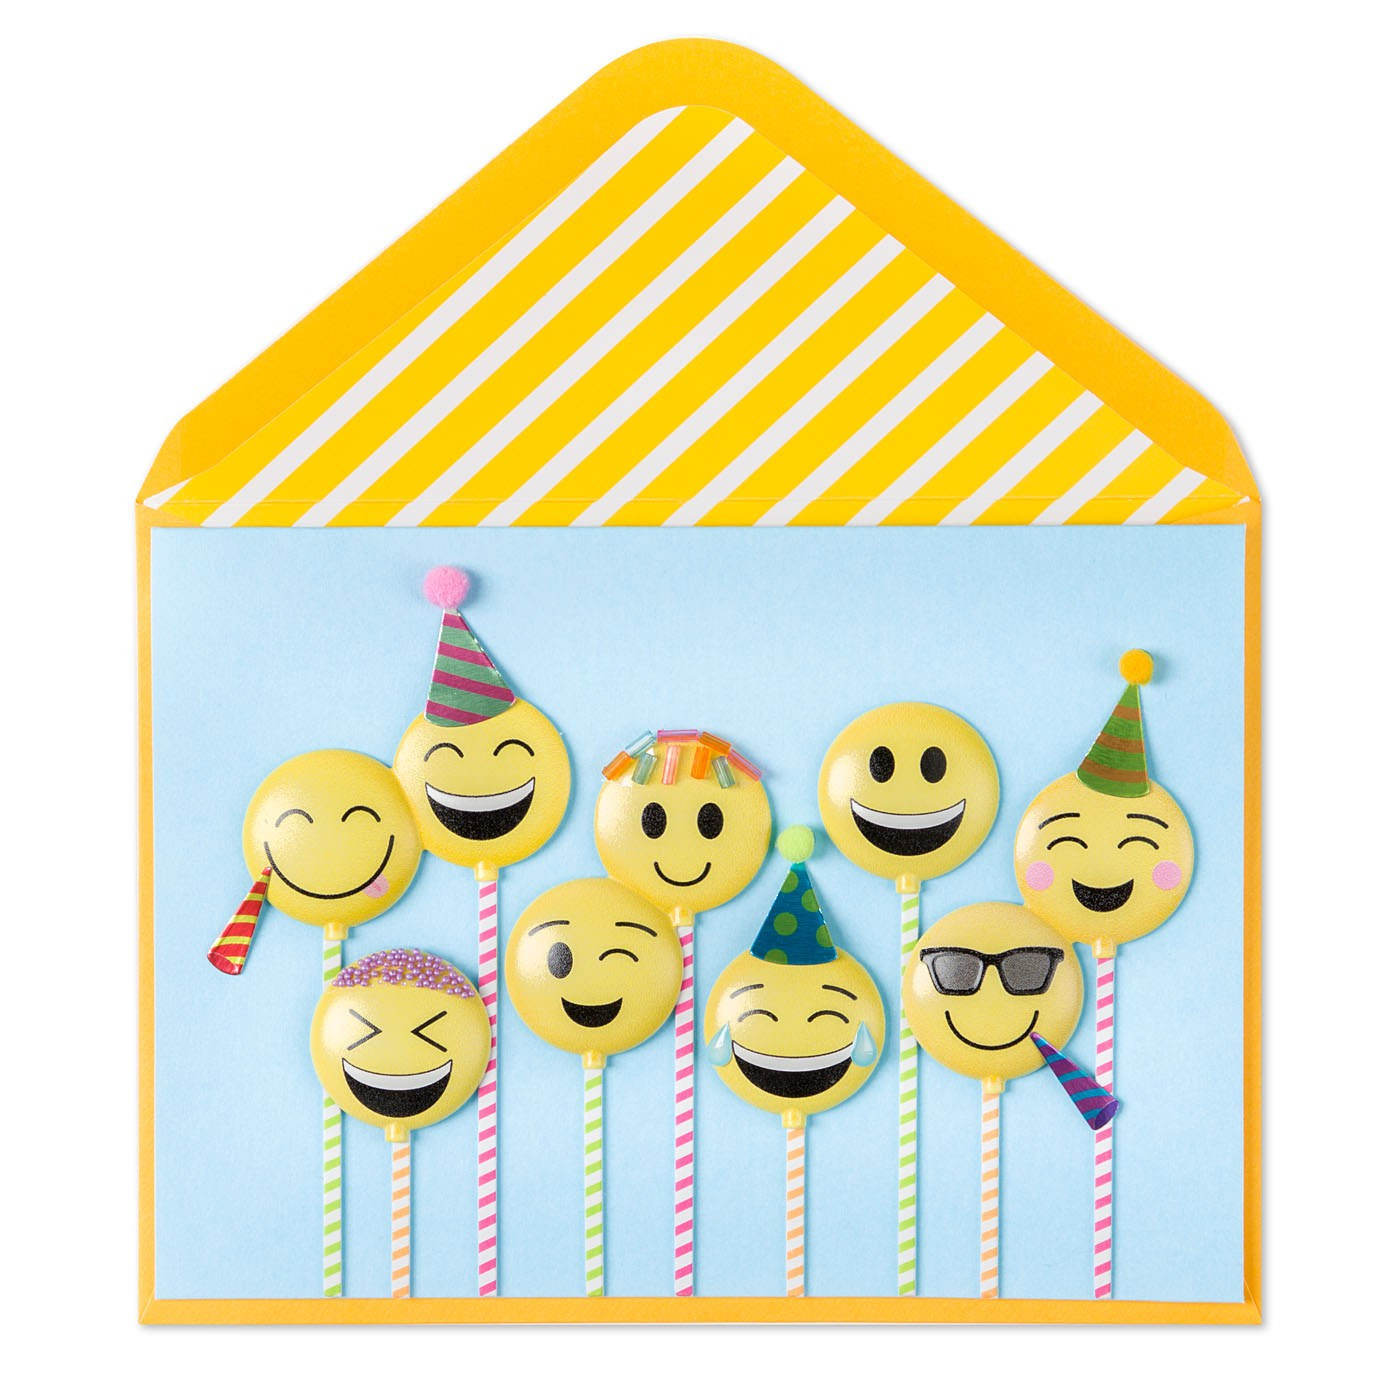 Best ideas about Emoji Birthday Card
. Save or Pin Emoji Cake Pops Birthday Cards Now.